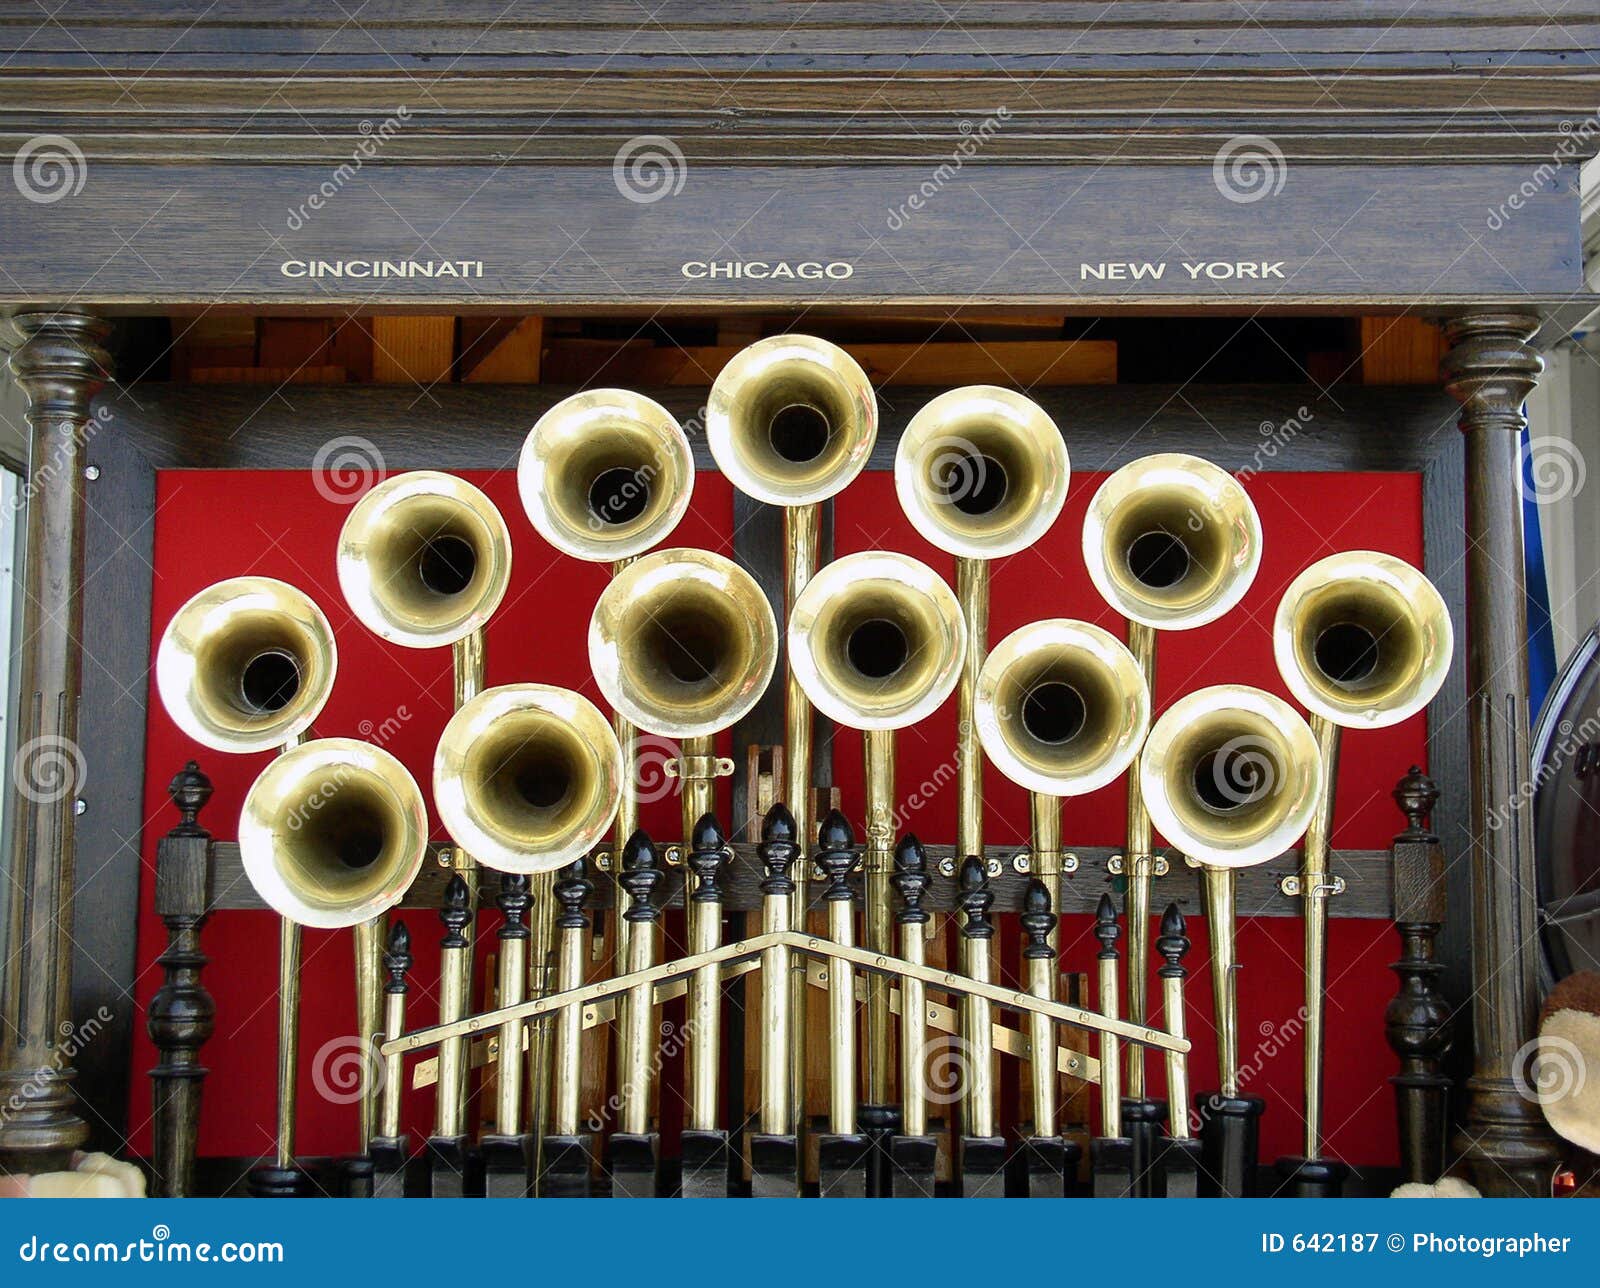 Mechanical Band Royalty Free Stock Photography - Image: 642187